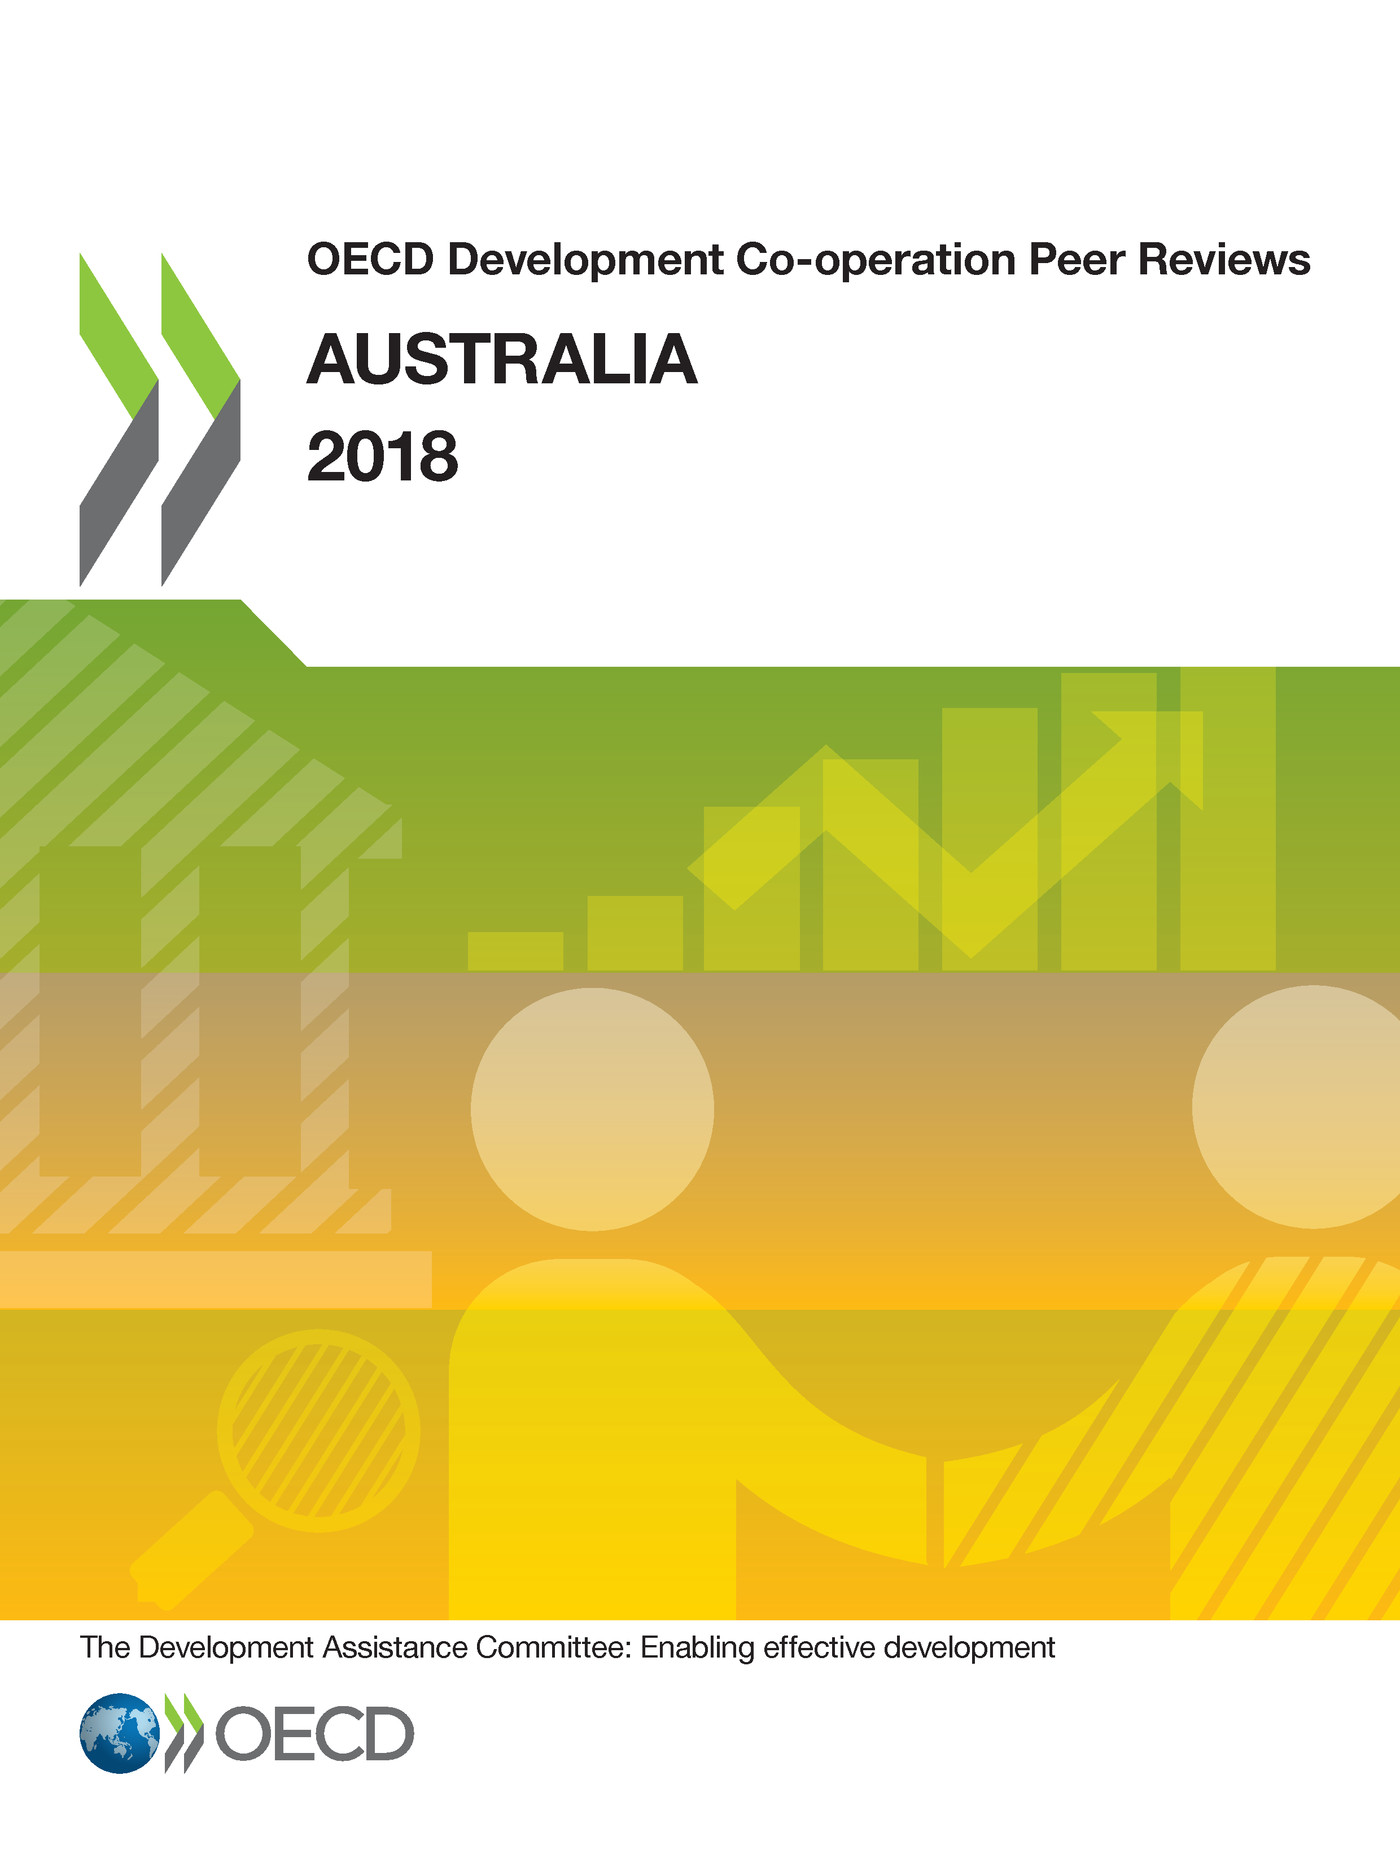 OECD Development Co-operation Peer Reviews: Australia 2018 -  Collectif - OCDE / OECD